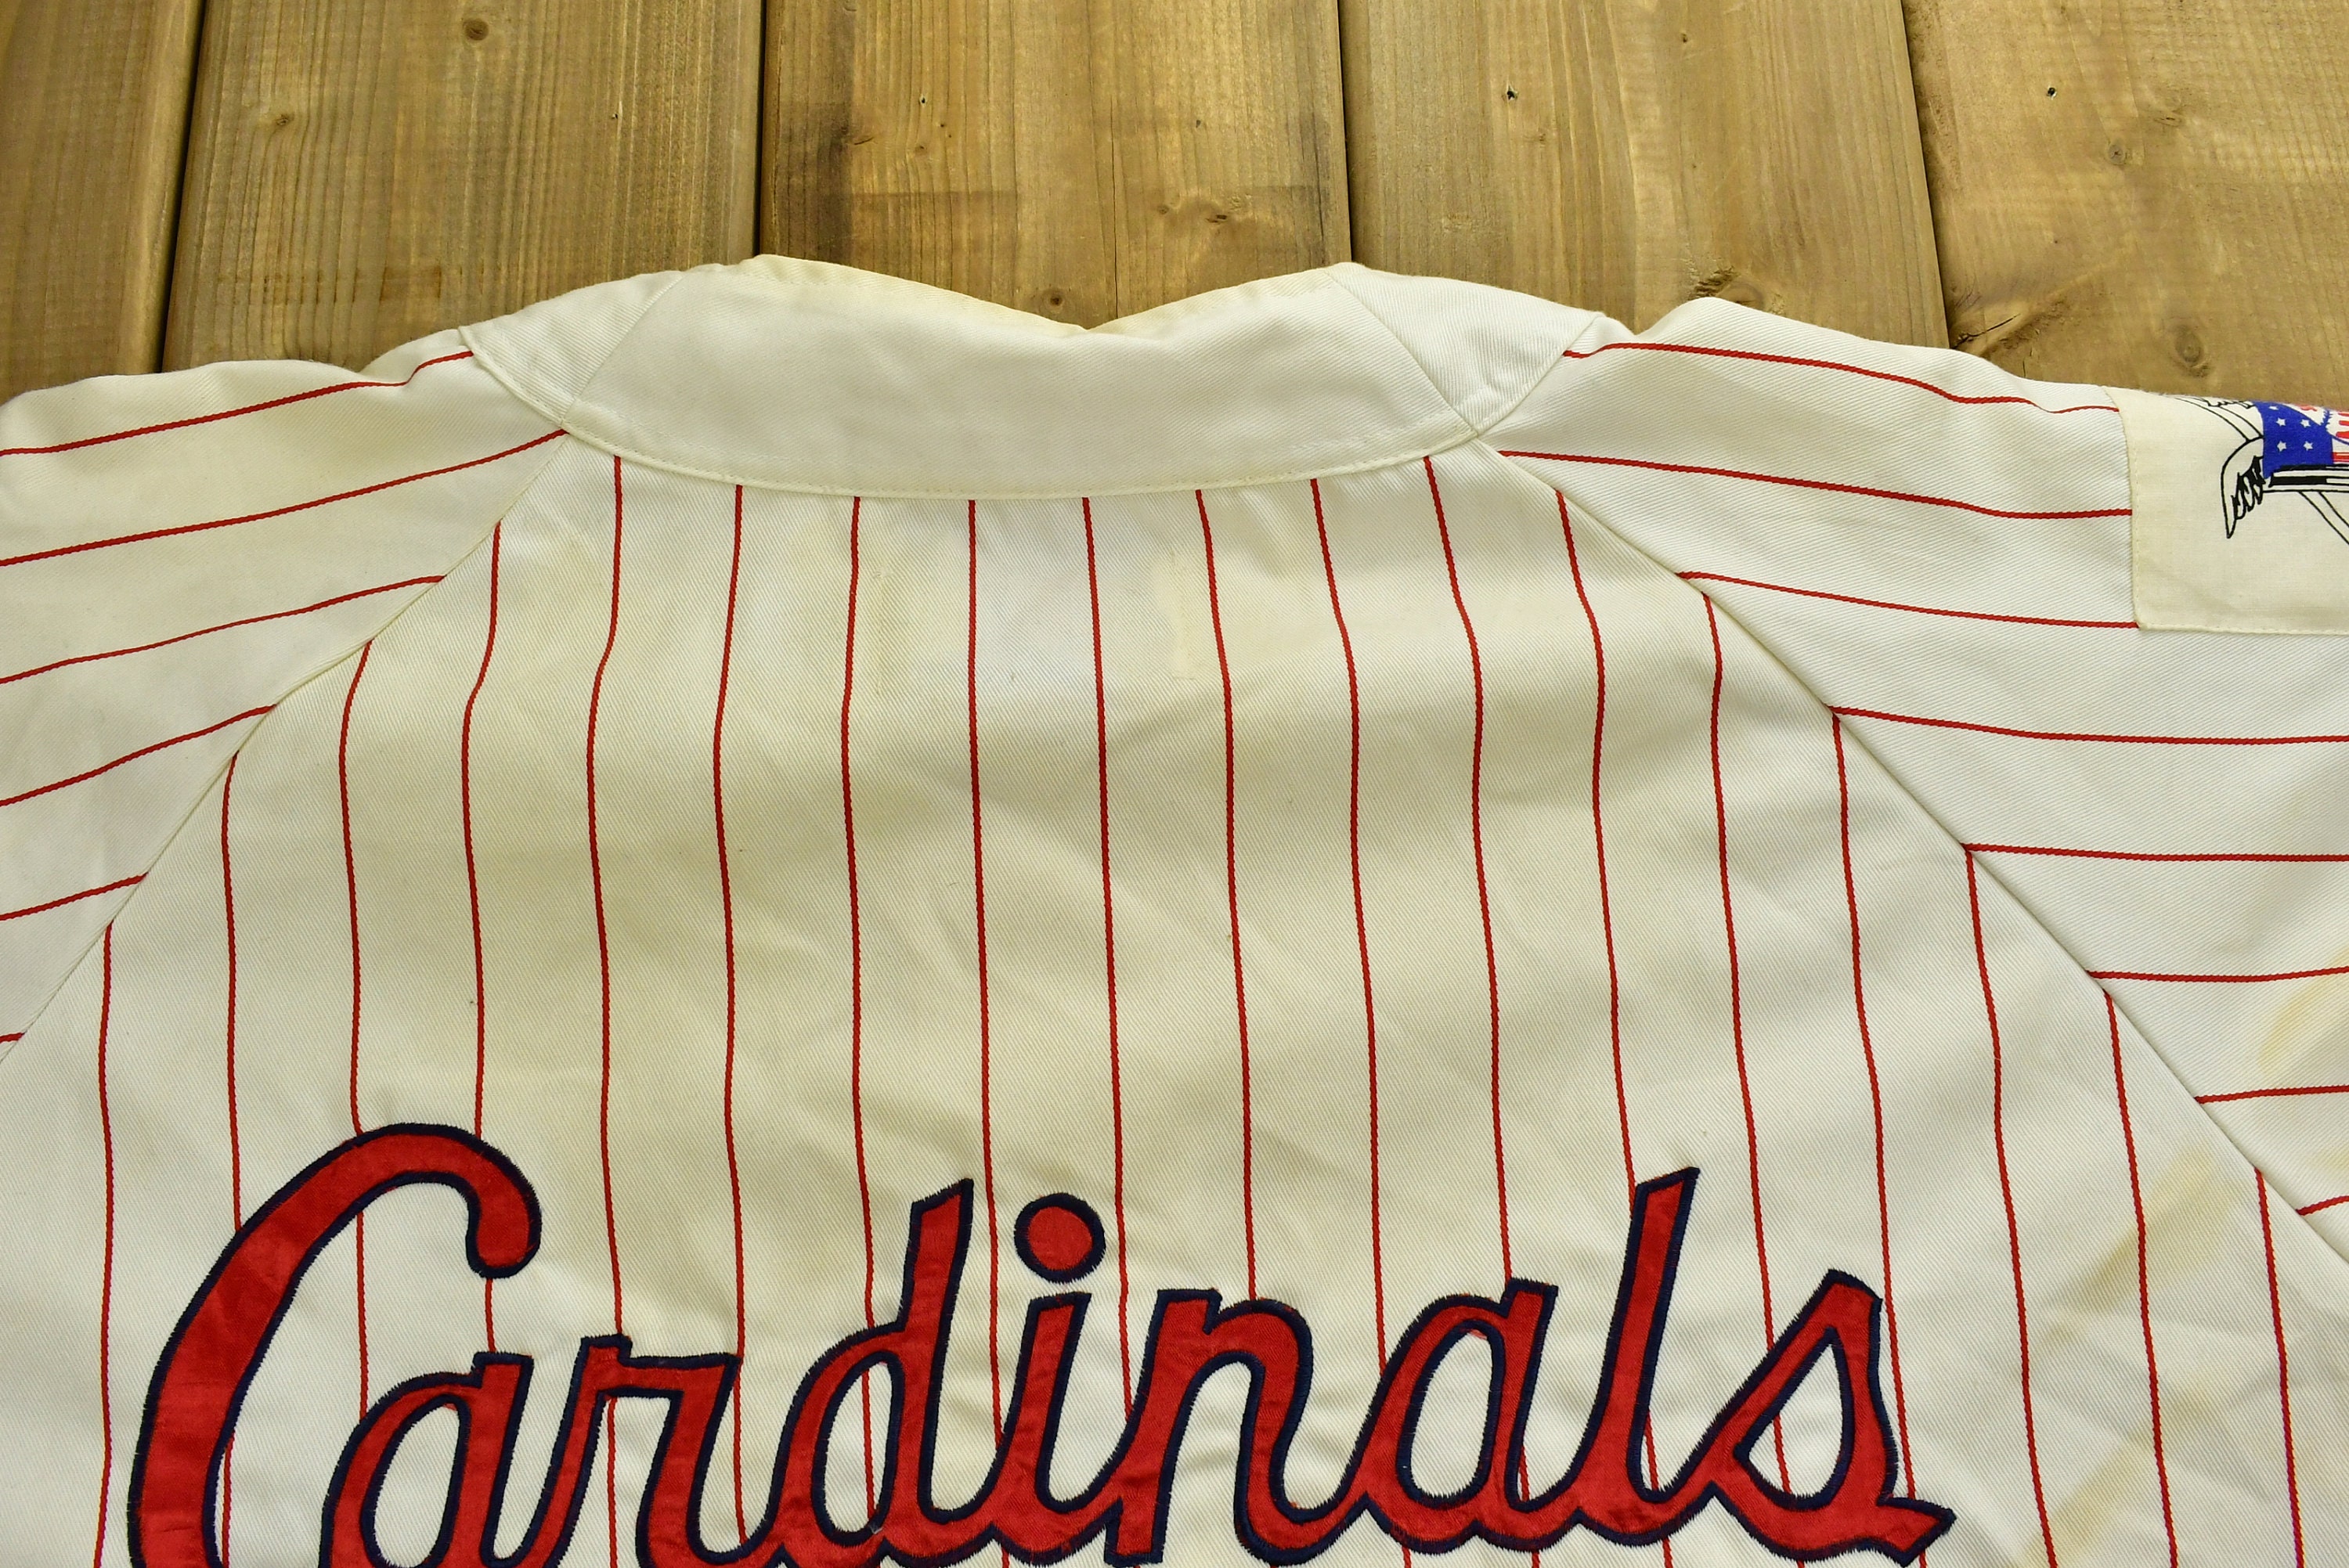 Vintage St Louis Cardinals Baseball T-Shirt Size Large Red 1987 80s ML –  Throwback Vault